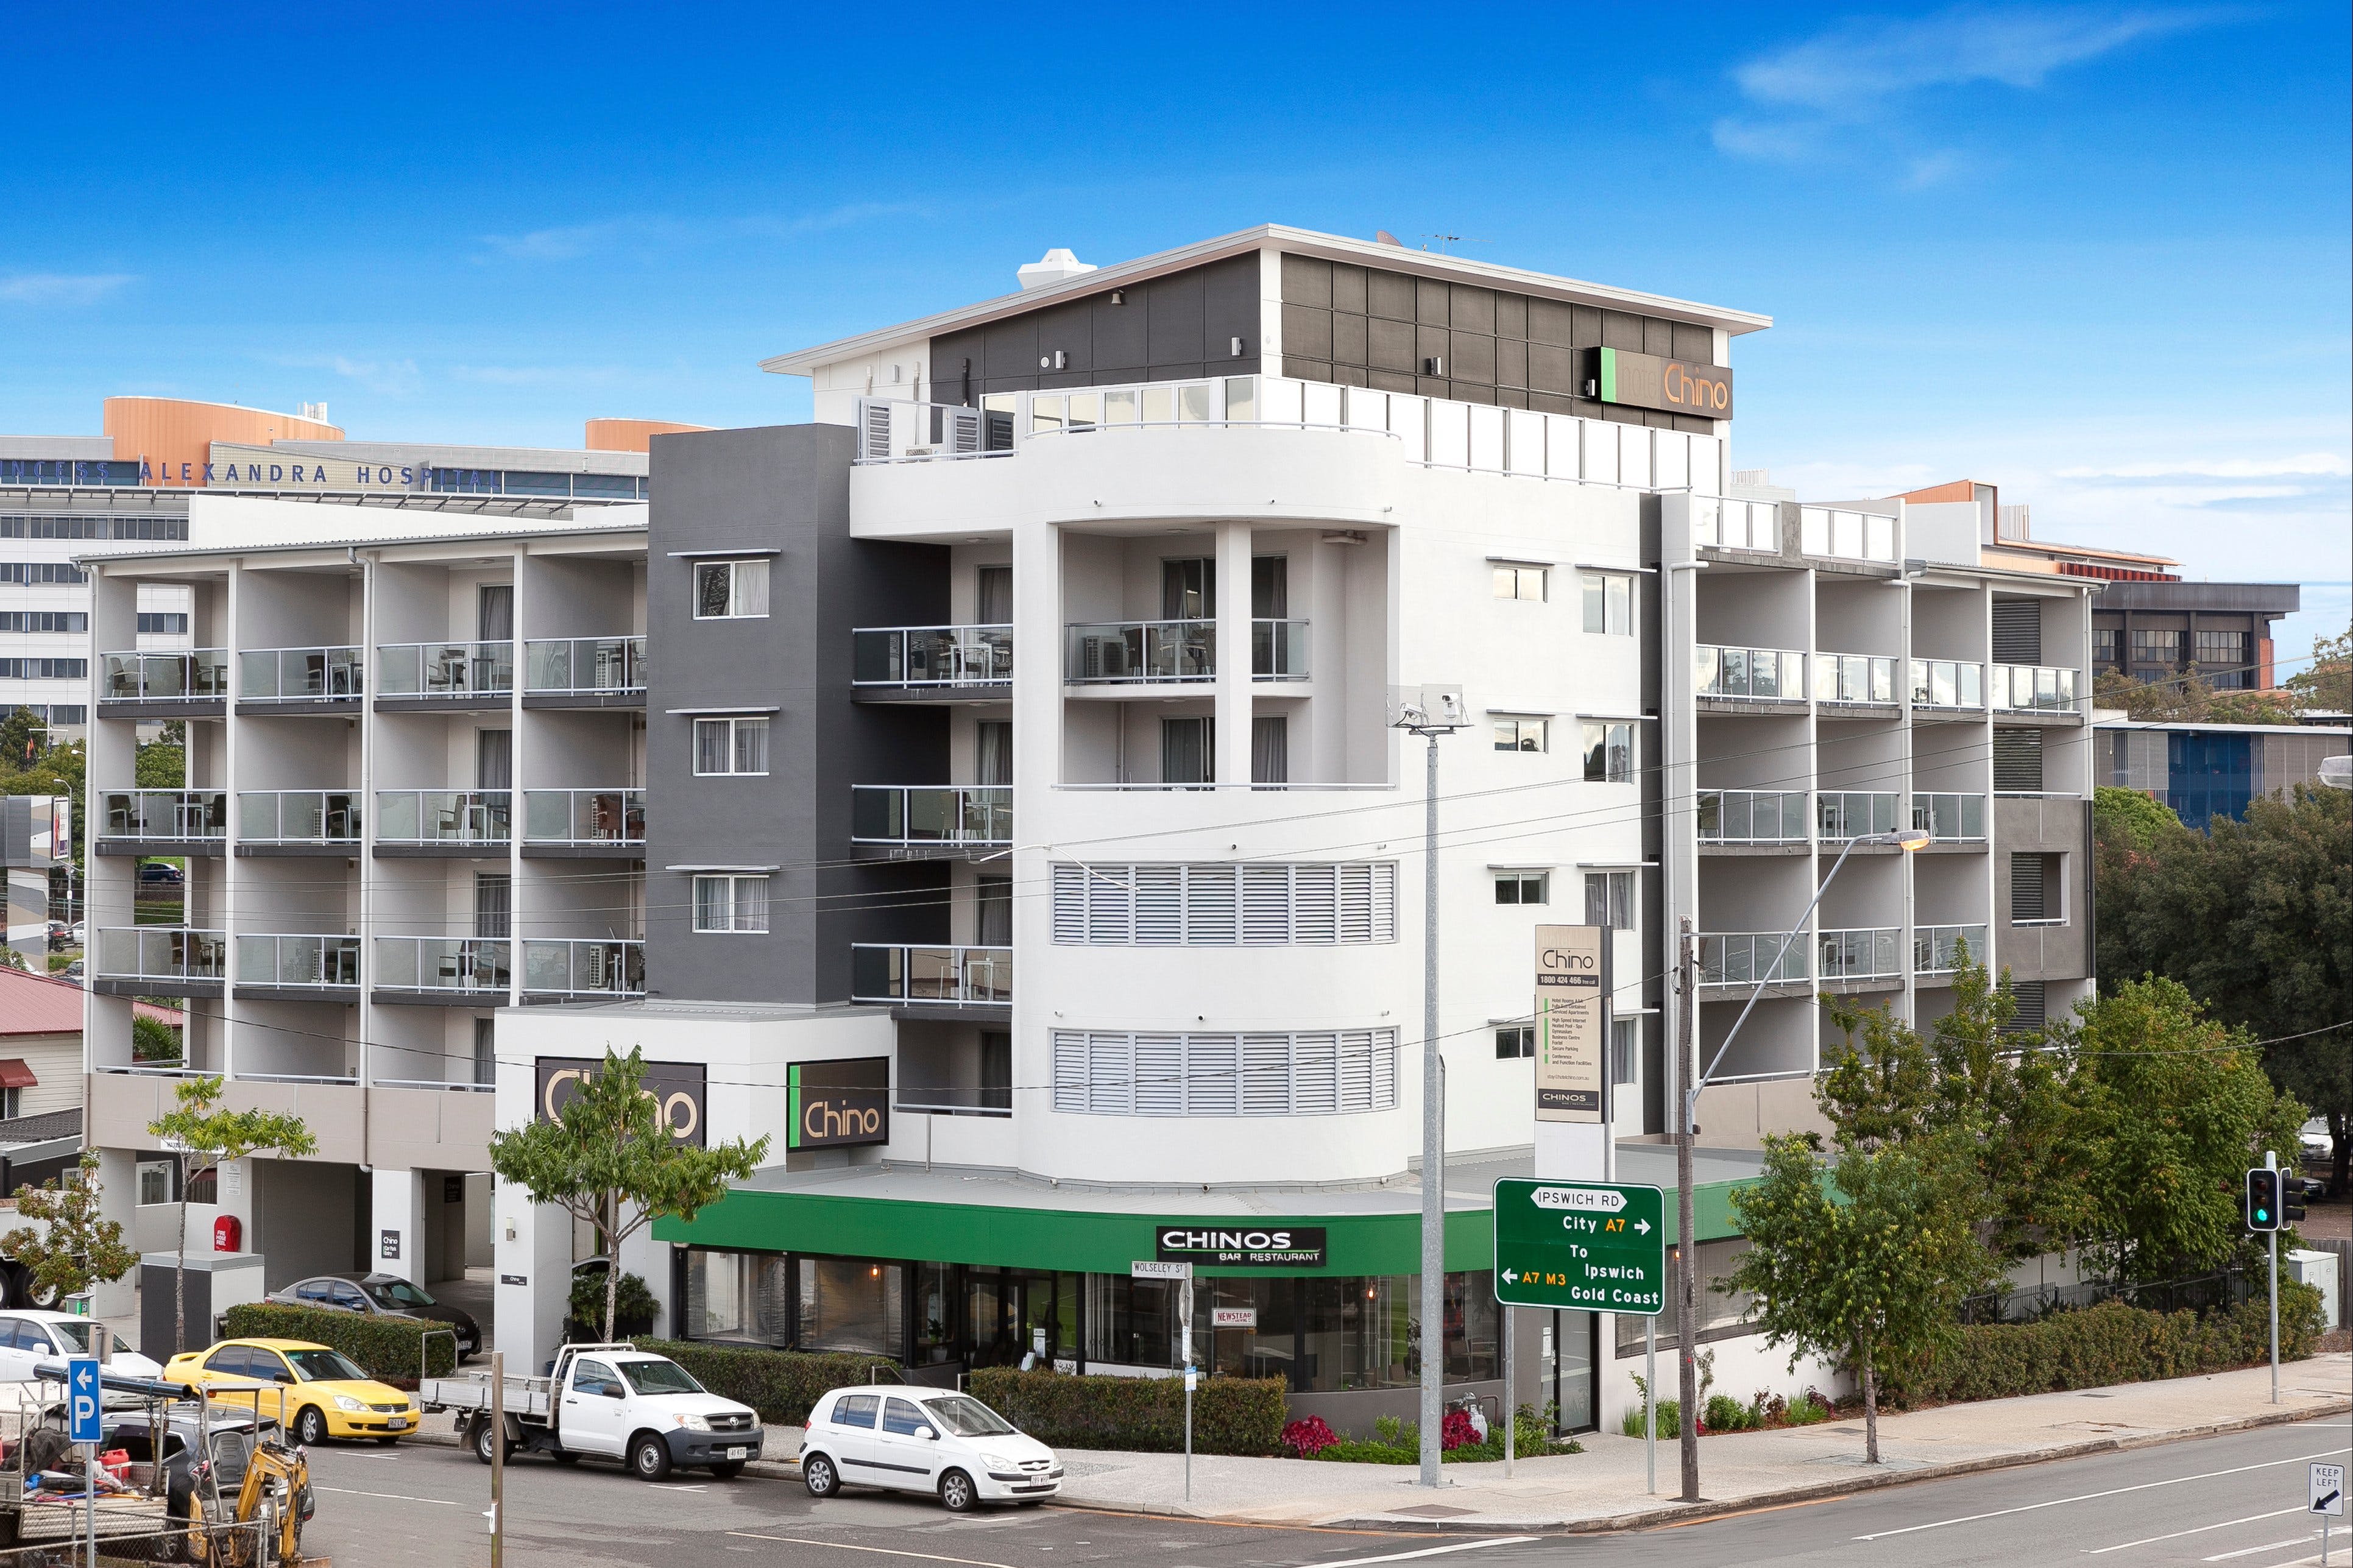 Hotel Chino - Accommodation in Brisbane